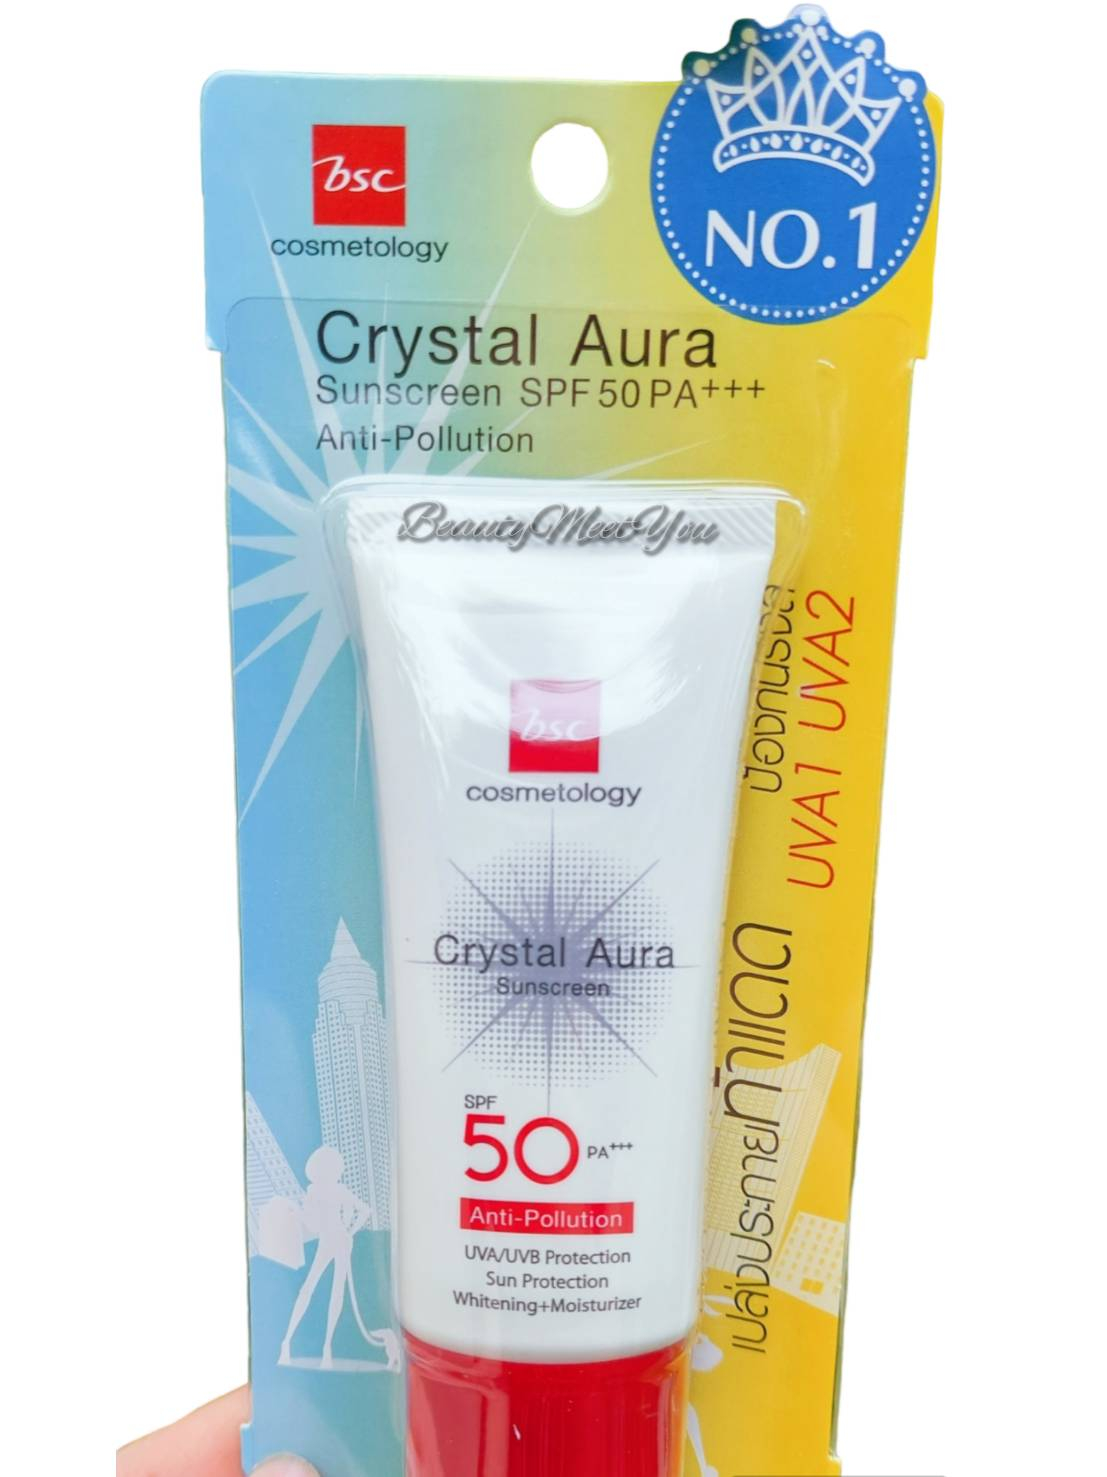 bsc-crystal-aura-sunscreen-spf-50-pa-25-กรัม-ครีมกันแดดบีเอสซี-คริสตัล-ออร่า-ซันสกรีน-เอสพีเอฟ-50-พีเอ-ป้องกัน-uva1-uva2